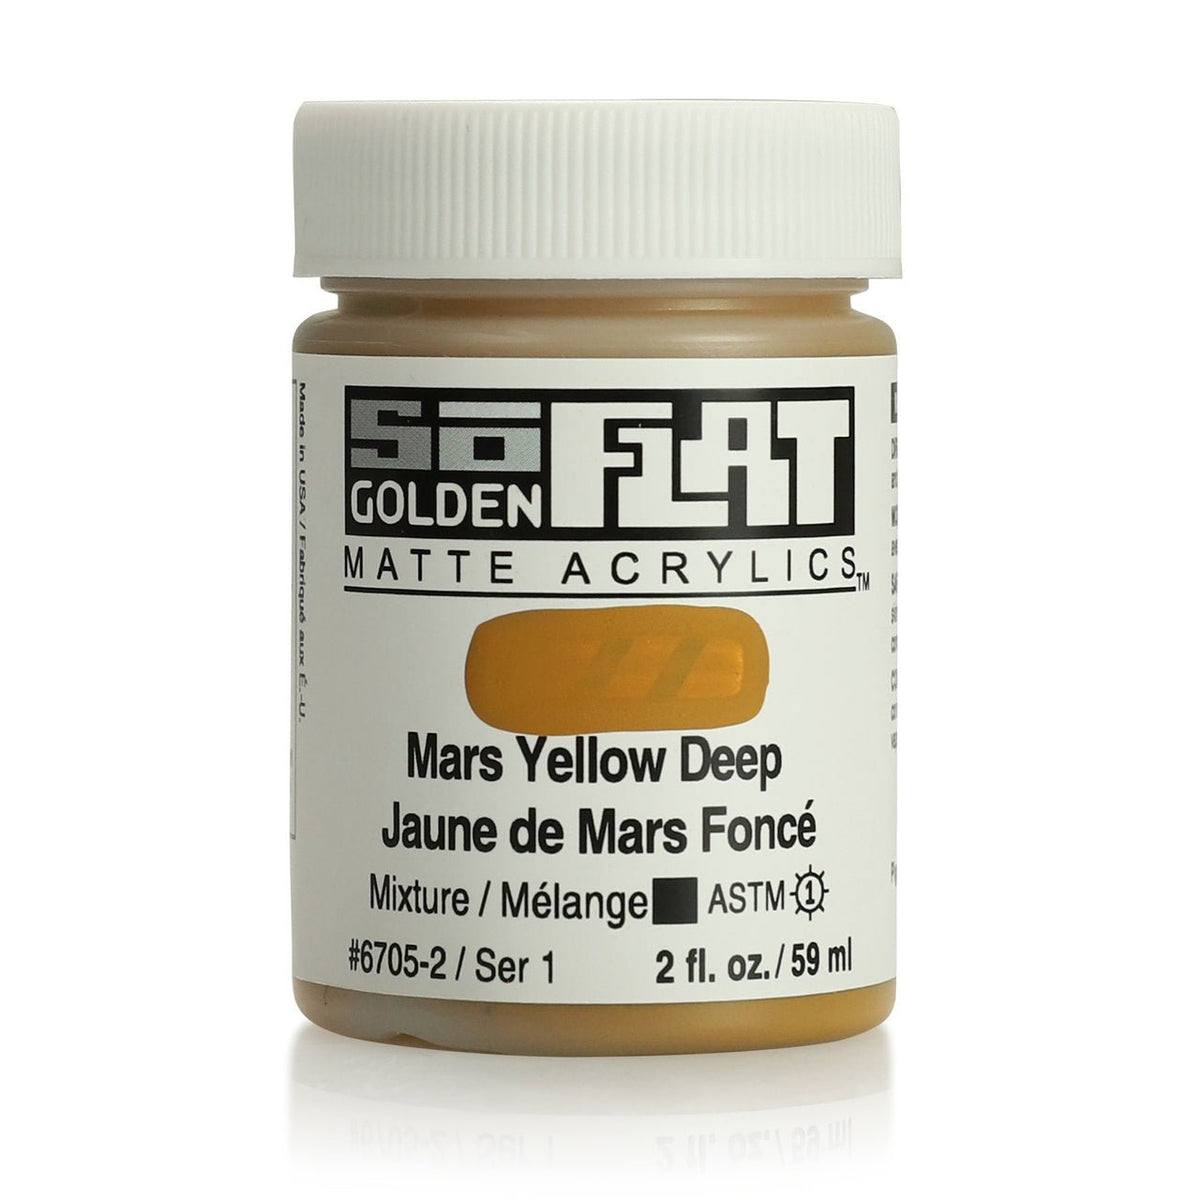 Golden SoFlat Matte Acrylic Paint - Mars Yellow Deep 2 oz jar - merriartist.com